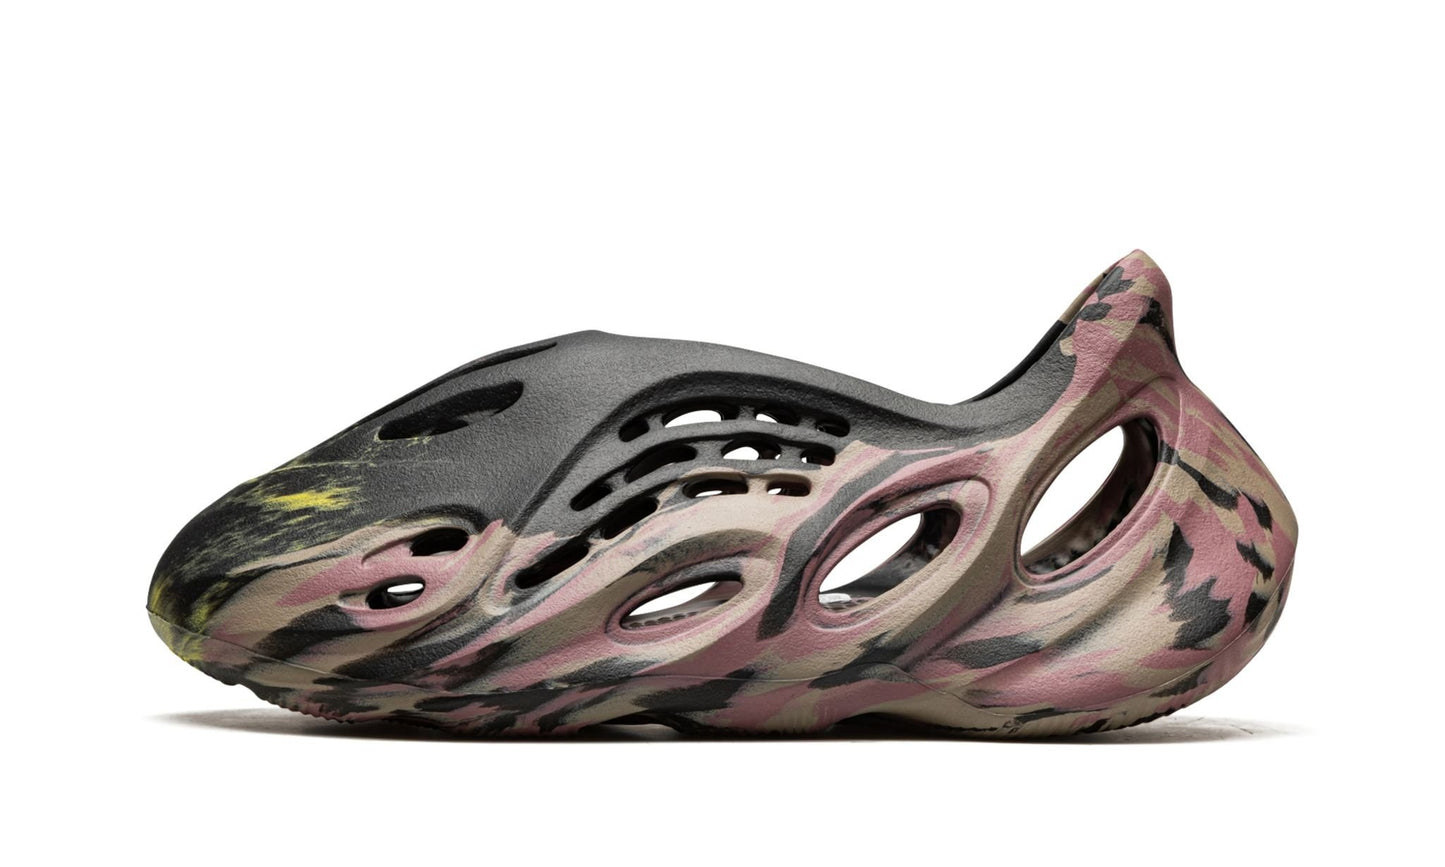 Adidas Yeezy foam rnr mx carbon (no box)